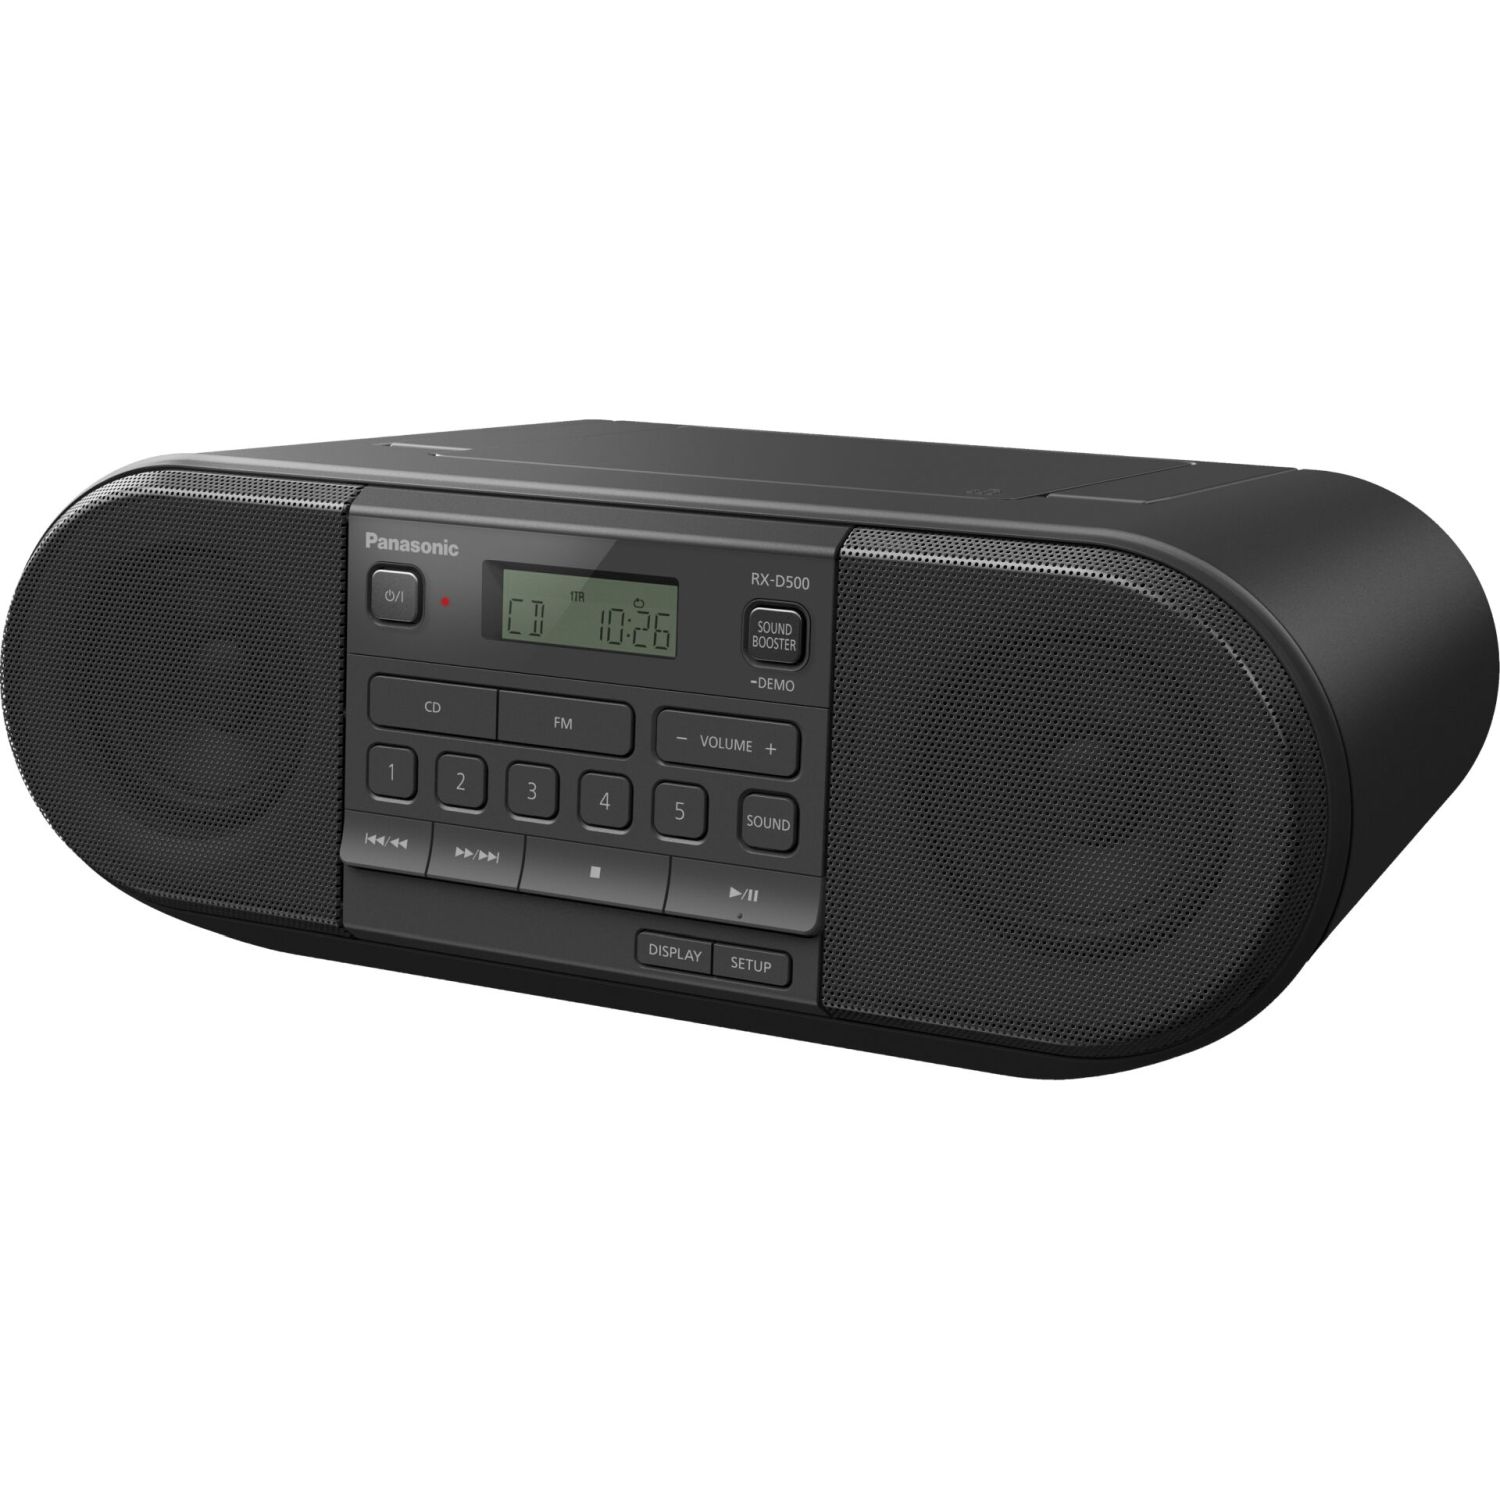 Panasonic RX-D500EG-K Radio Boom Box CD UKW